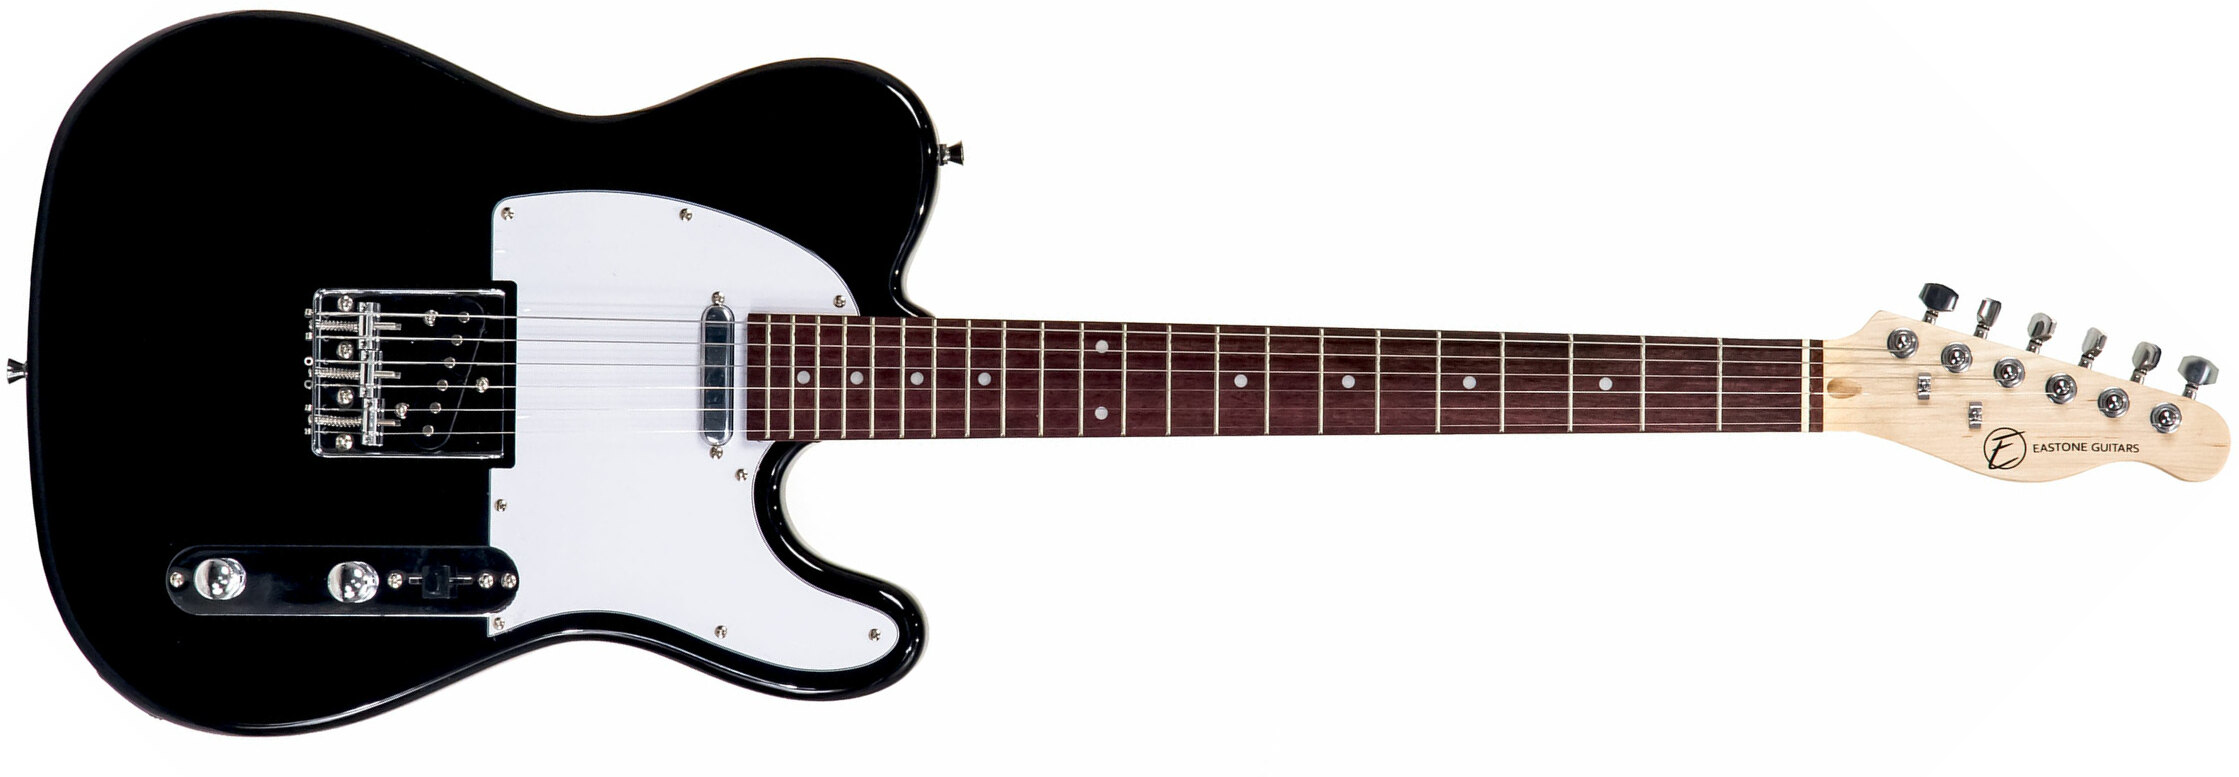 Eastone Tl70 Ss Ht Pur - Black - Televorm elektrische gitaar - Main picture